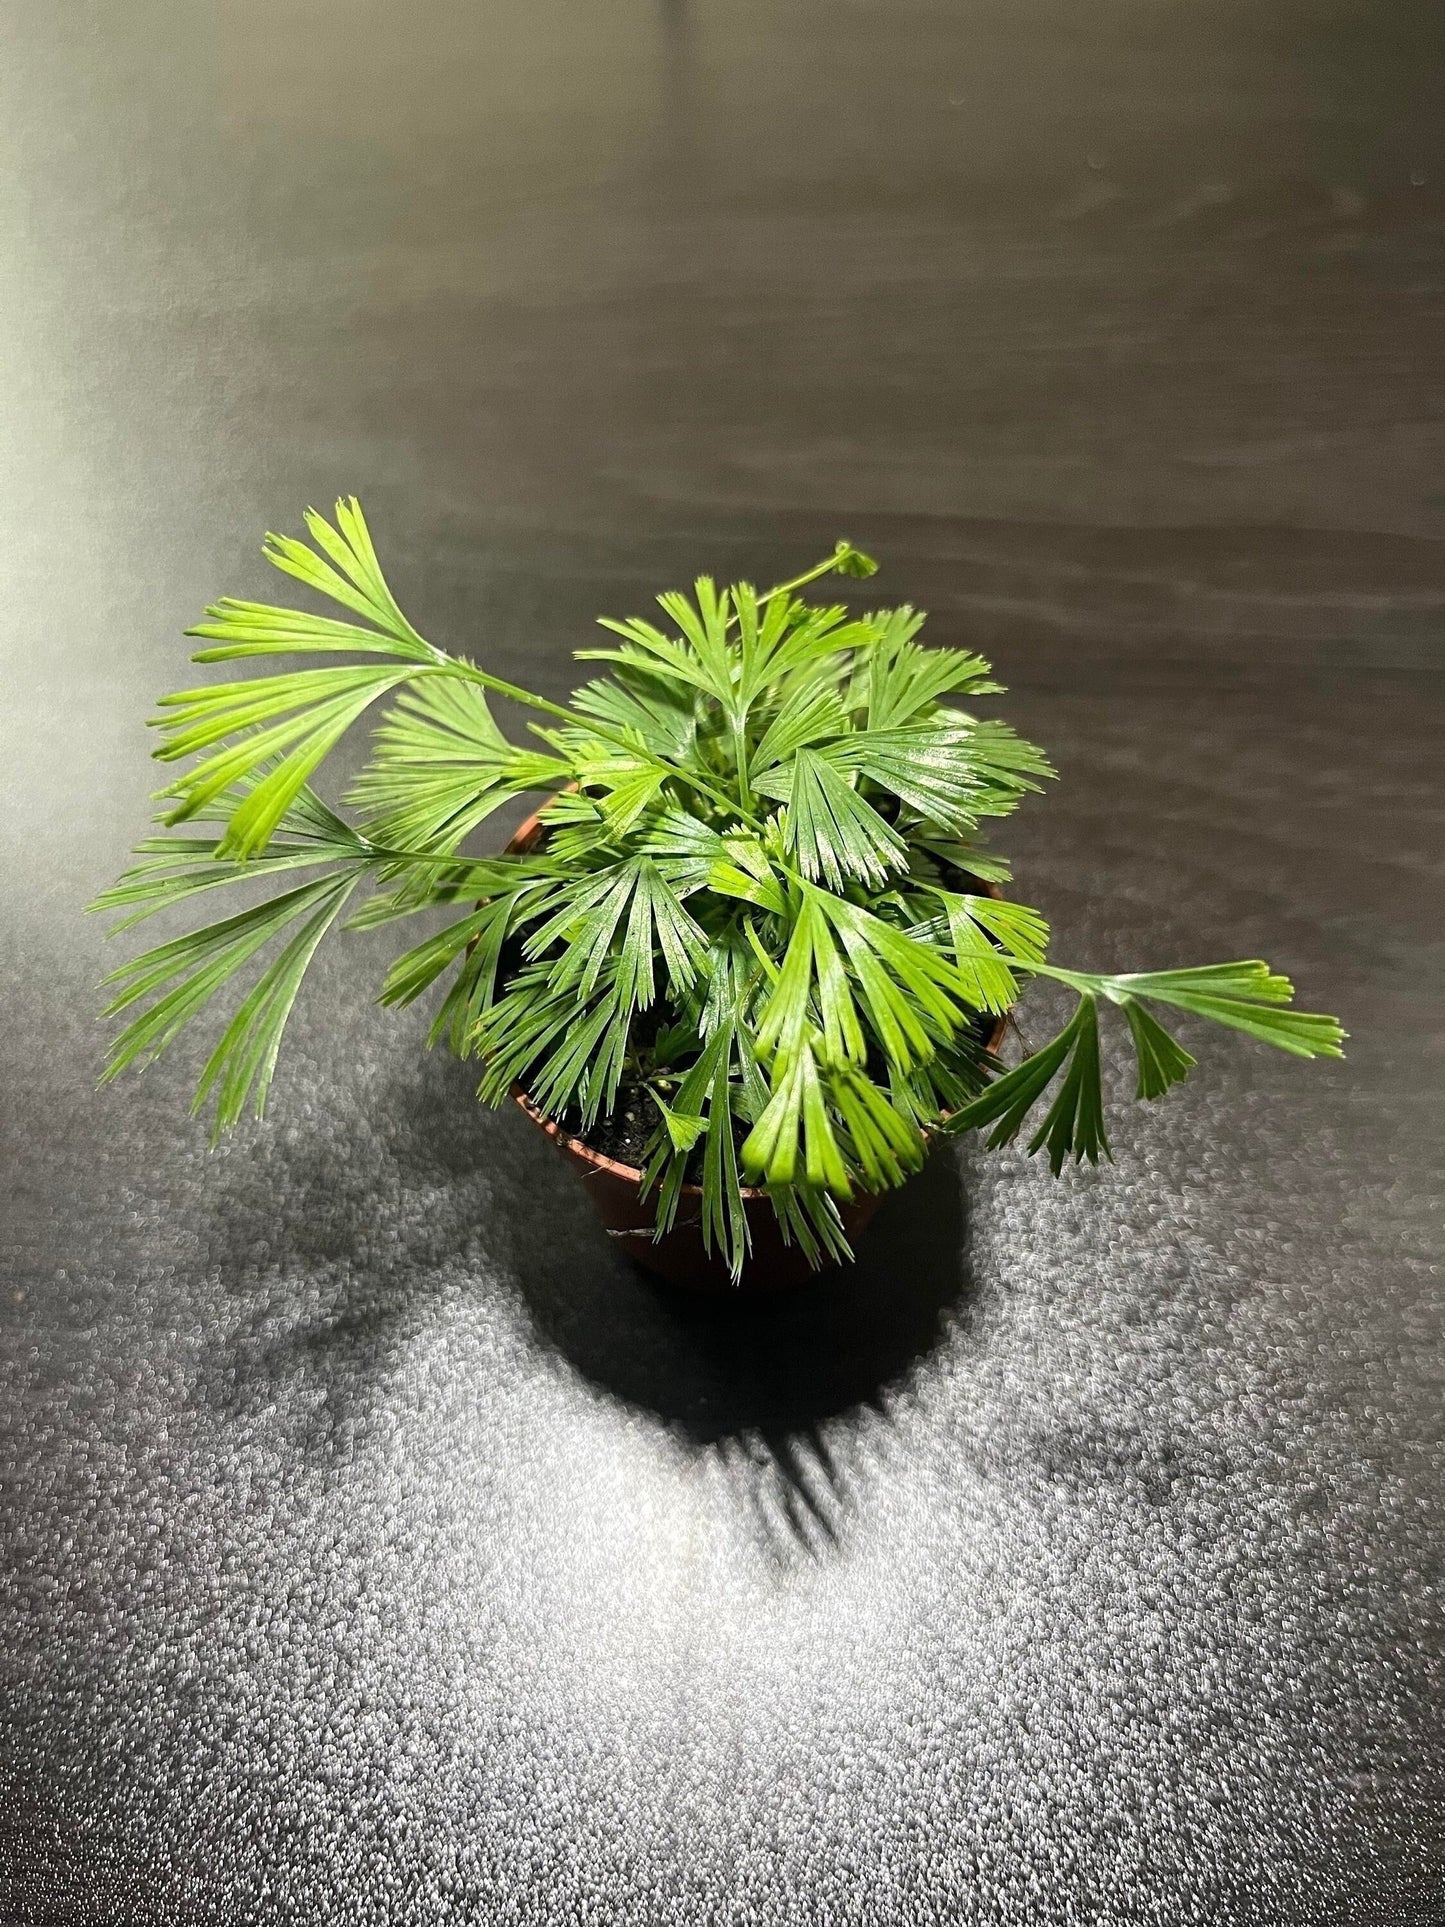 Eye-lash fern - actiniopteris australis 5.5cm pot ( miniature fern terrarium plant )